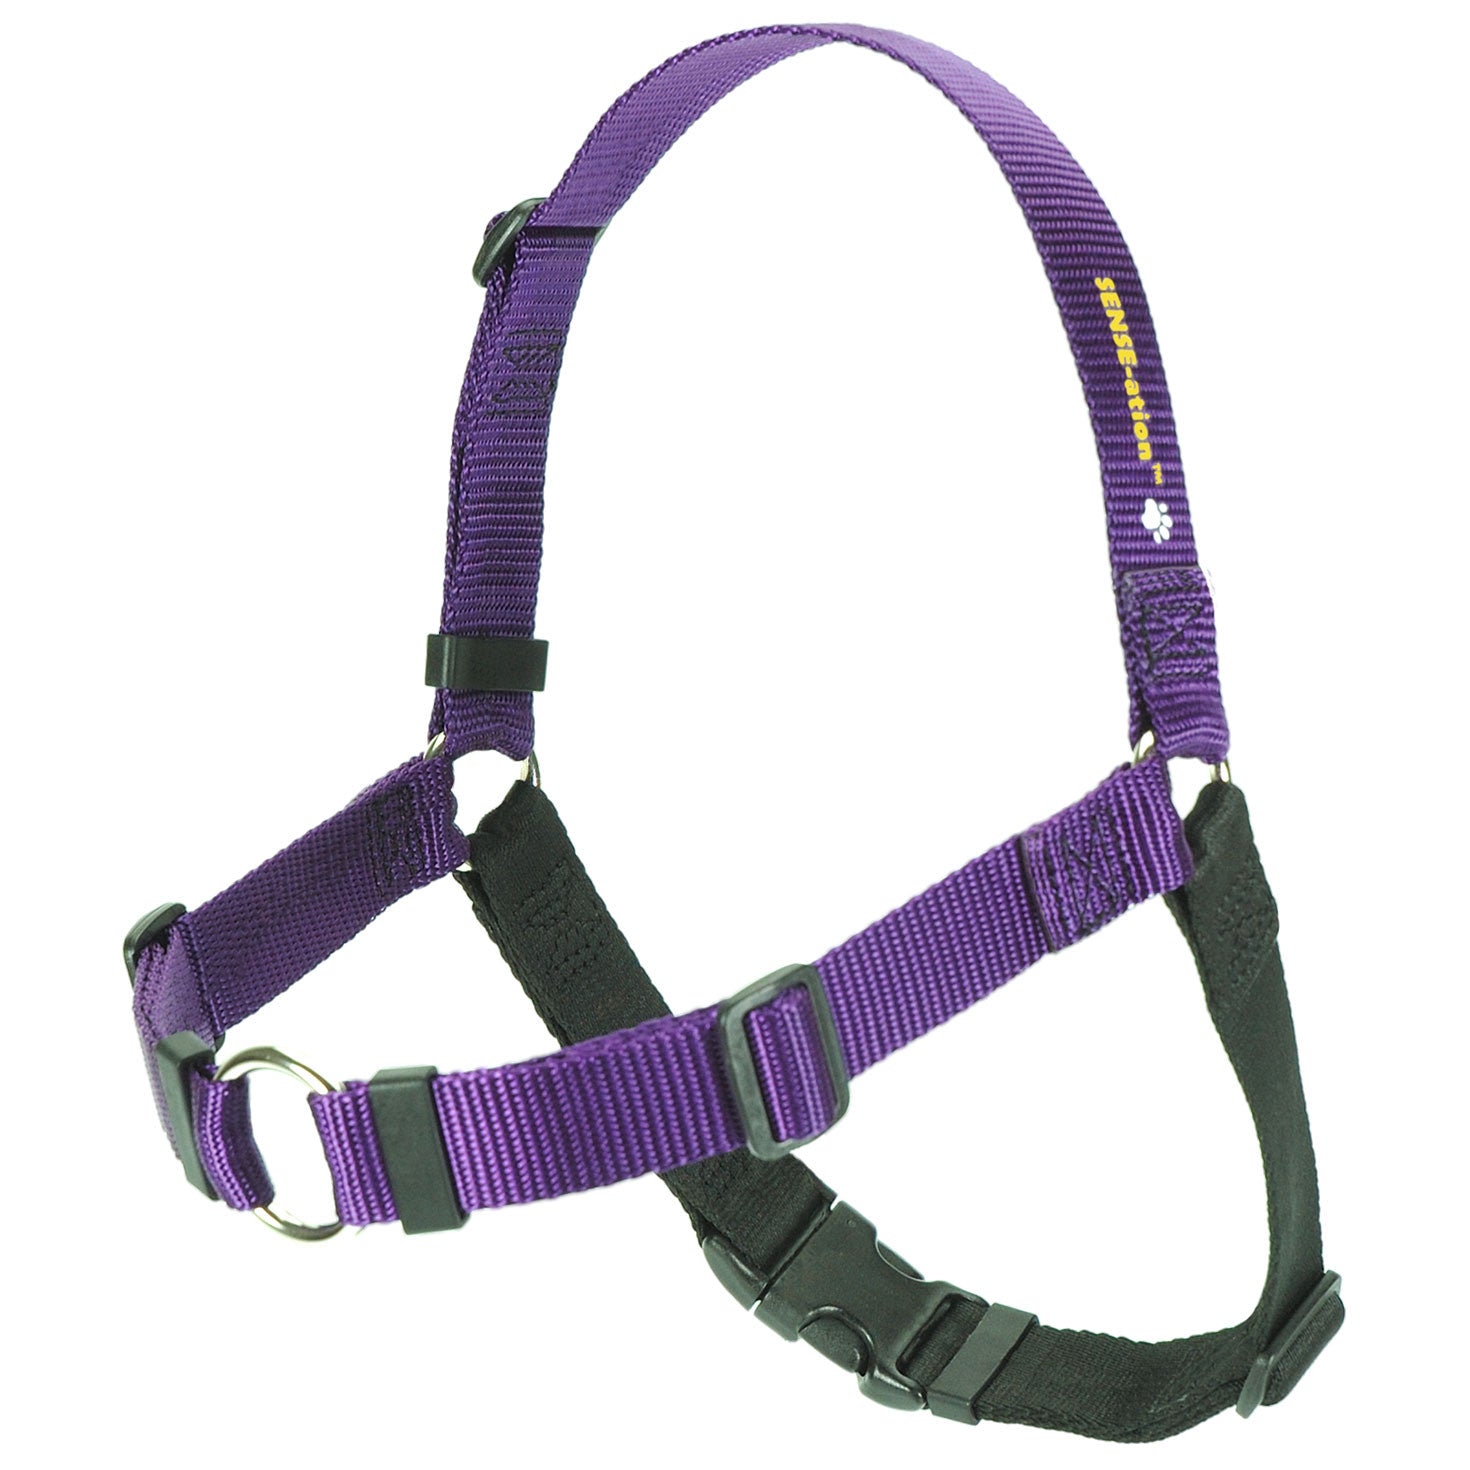 SENSE-ation Dog Harness - Purple